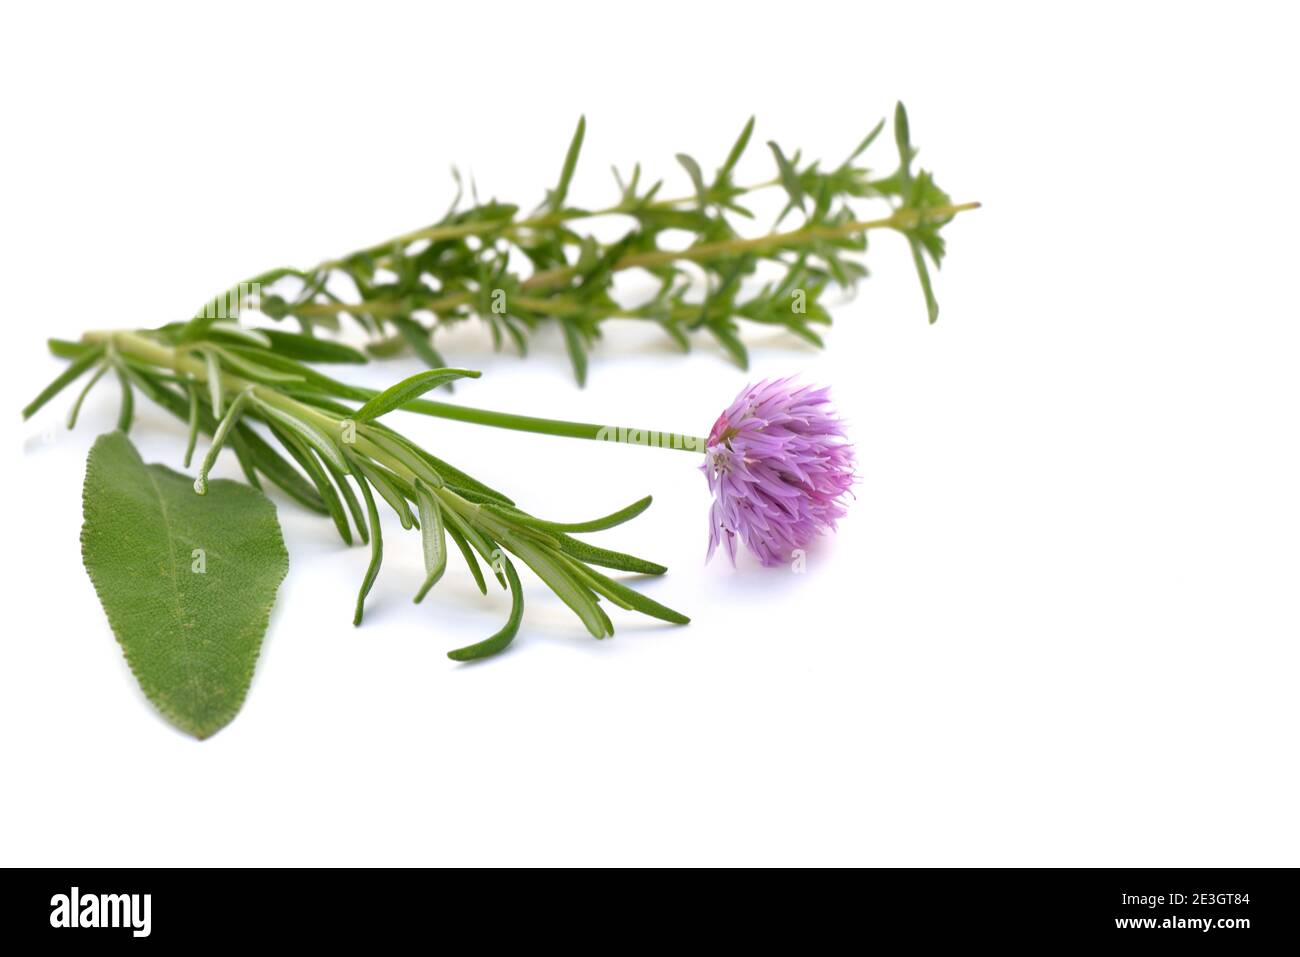 various fresh aromatic herbs on white background Stock Photo